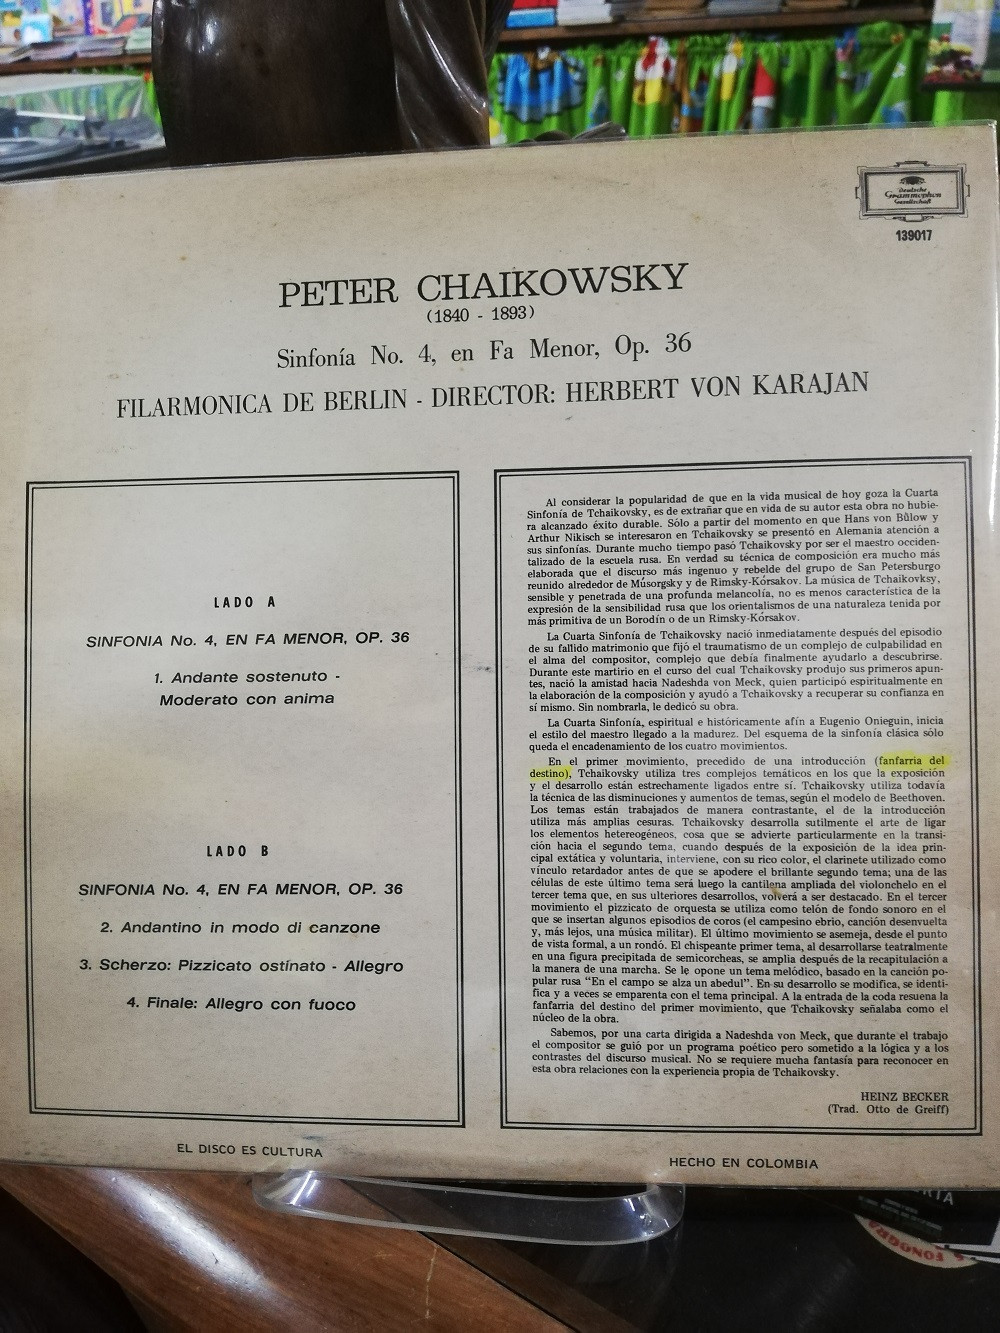 Imagen LP PETER TCHAIKOWSKY - SINFONIA No. 4 EN FA MENOR OP. 36 2